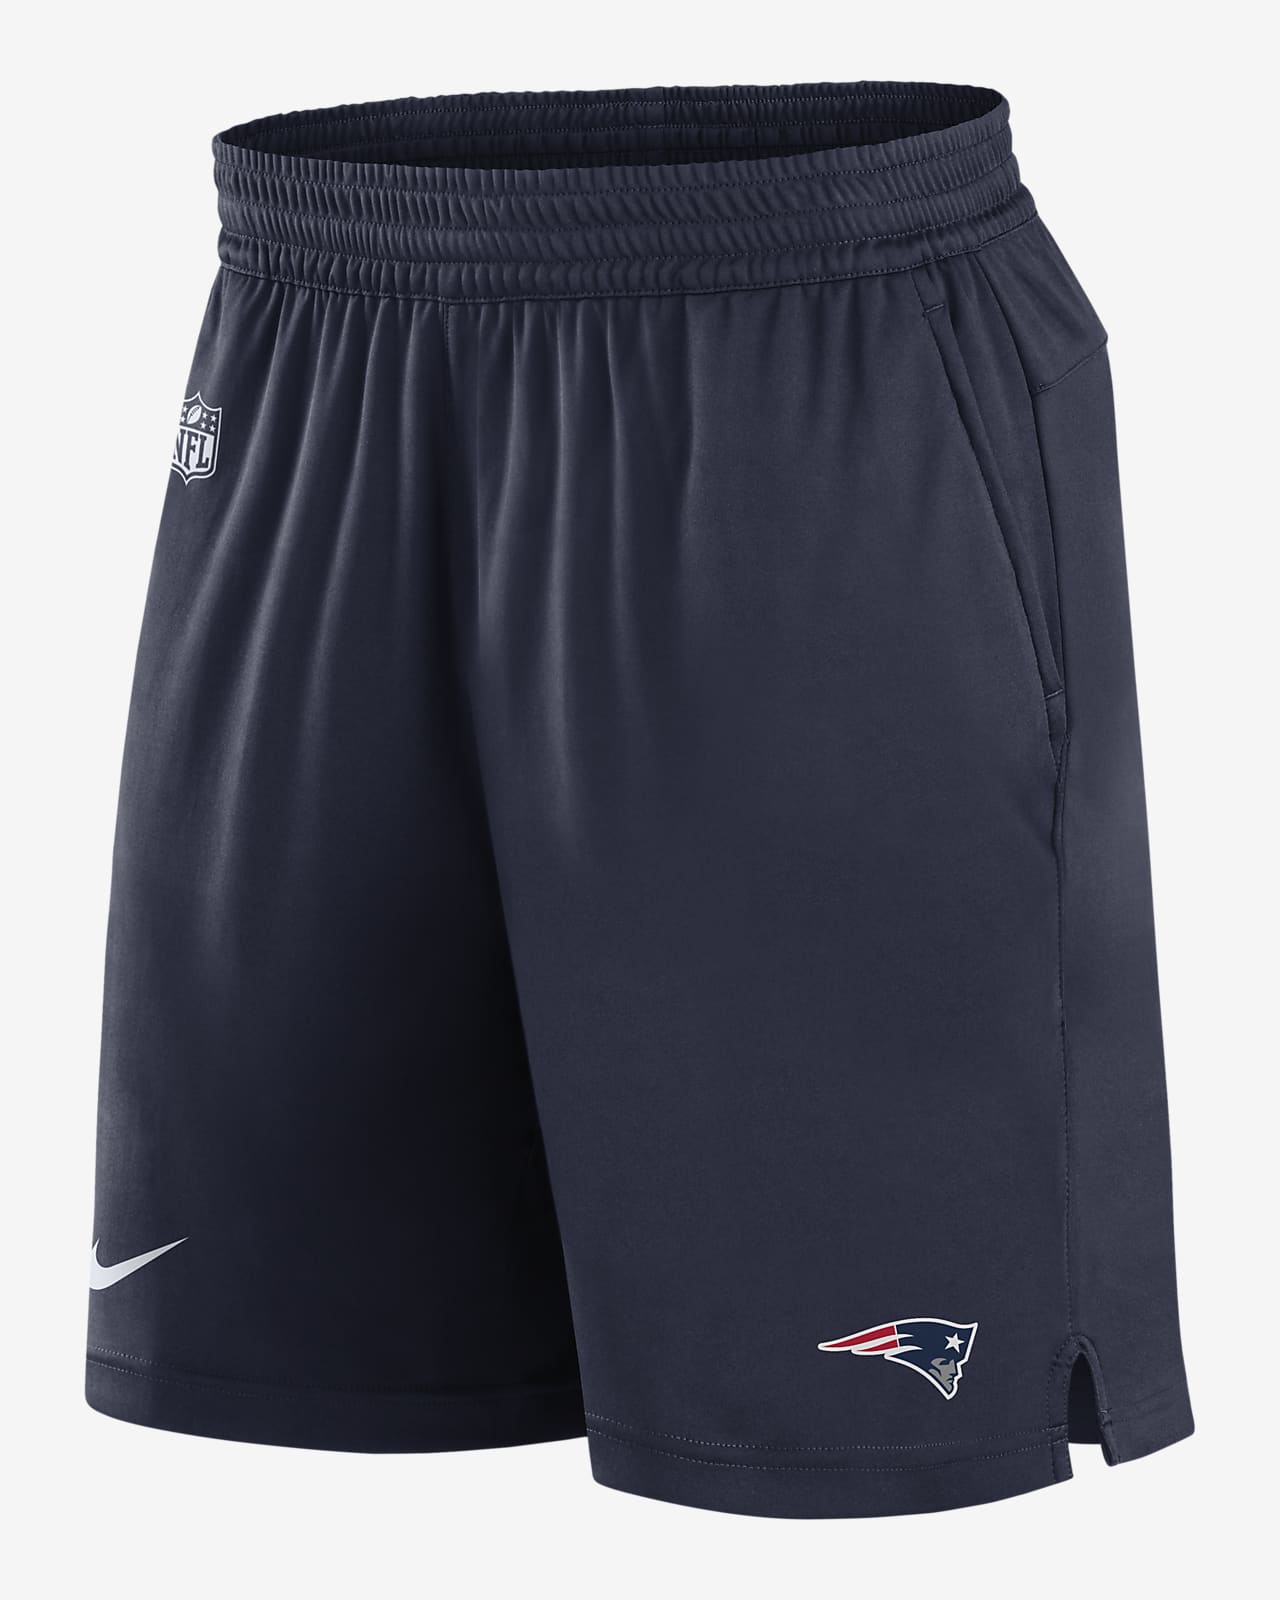 Nike Dri-FIT Sideline (NFL New England Patriots) Men's Shorts